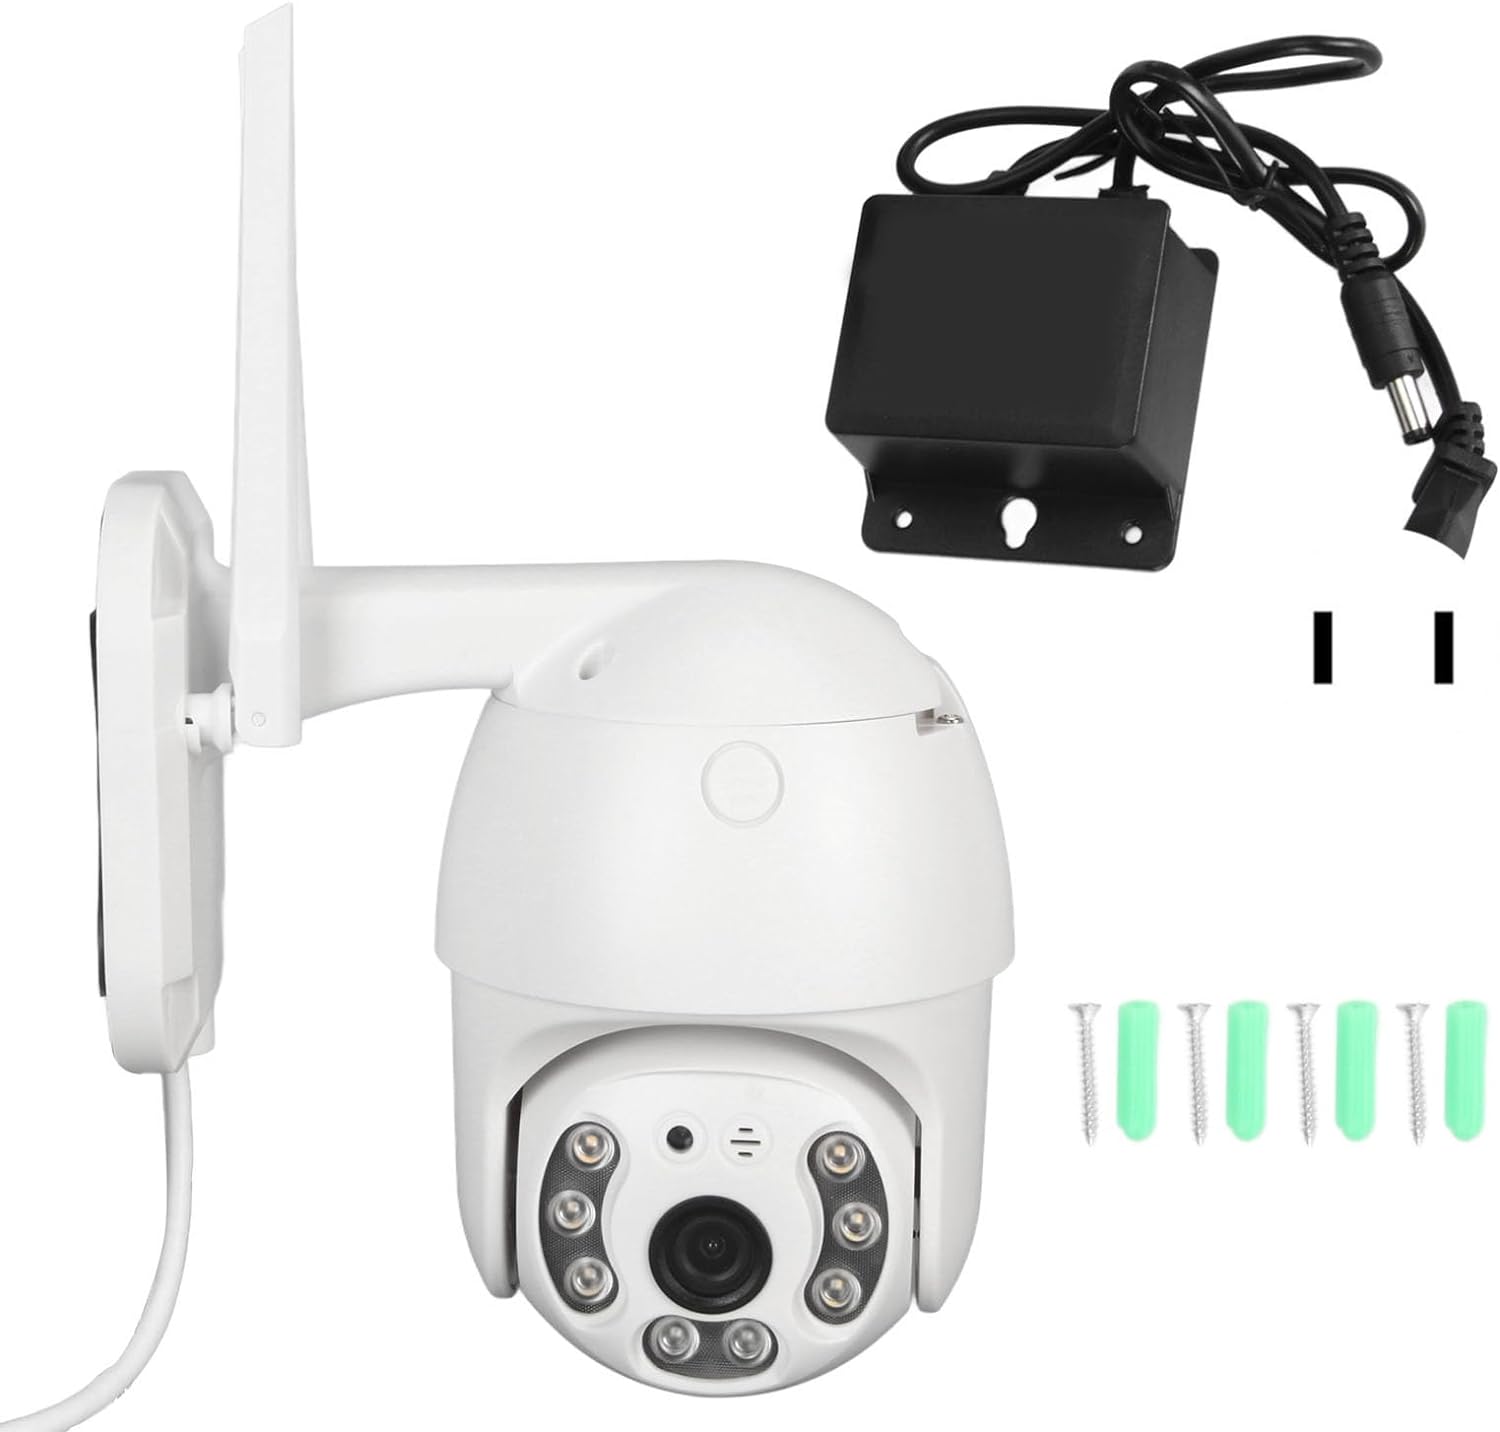 Outdoor Security Camera, Surveillance Camera 2.4GHz WiFi for Shop (US Plug)